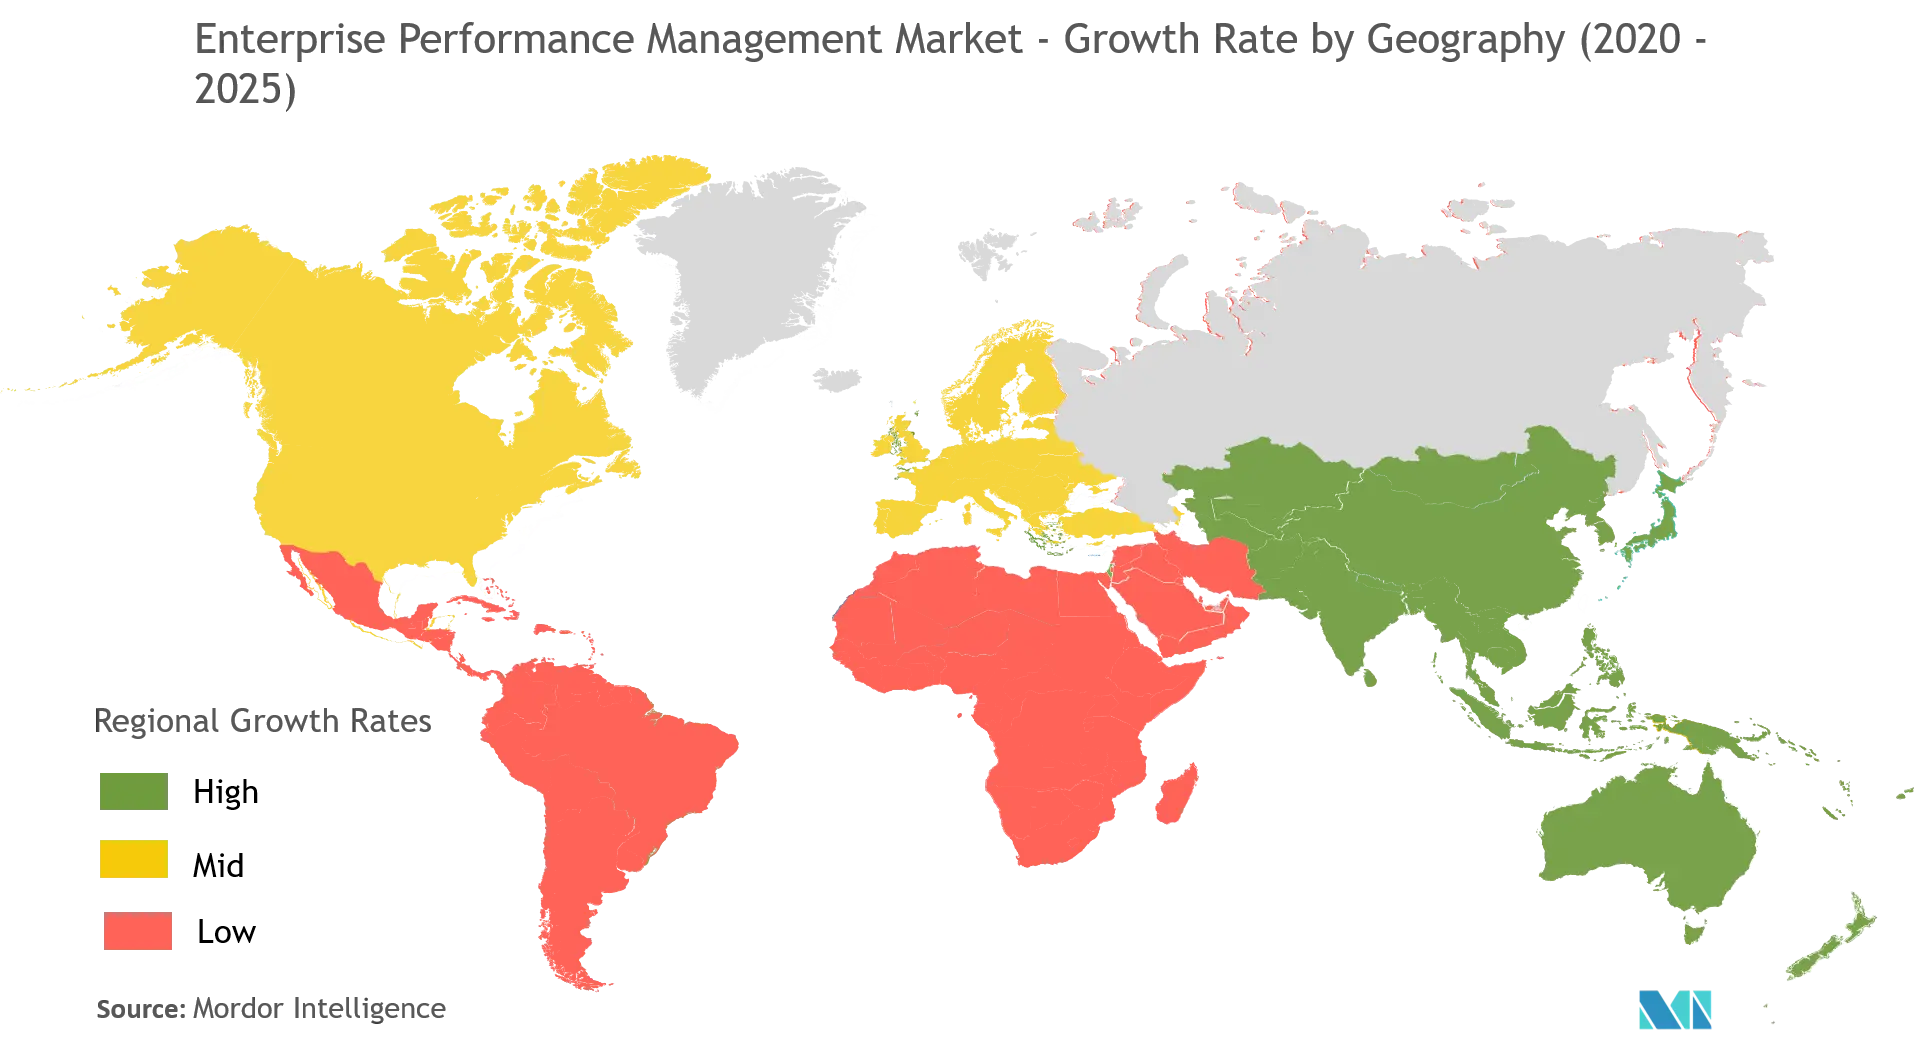 Enterprise Performance Management Market Growth by Region